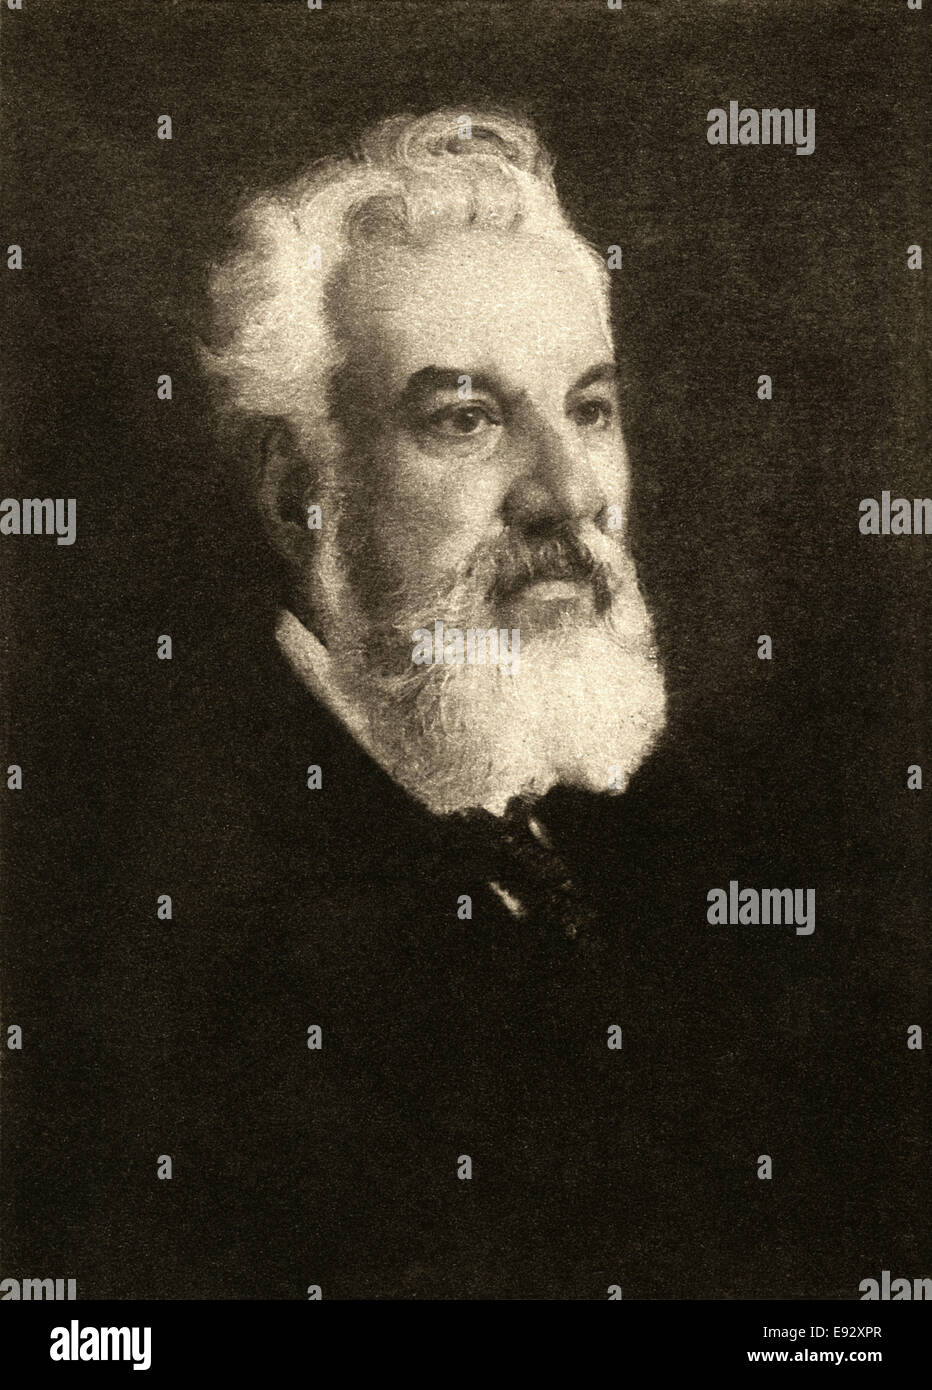 Alexander Graham Bell (1847-1922), Inventor of Telephone, Portrait Stock Photo